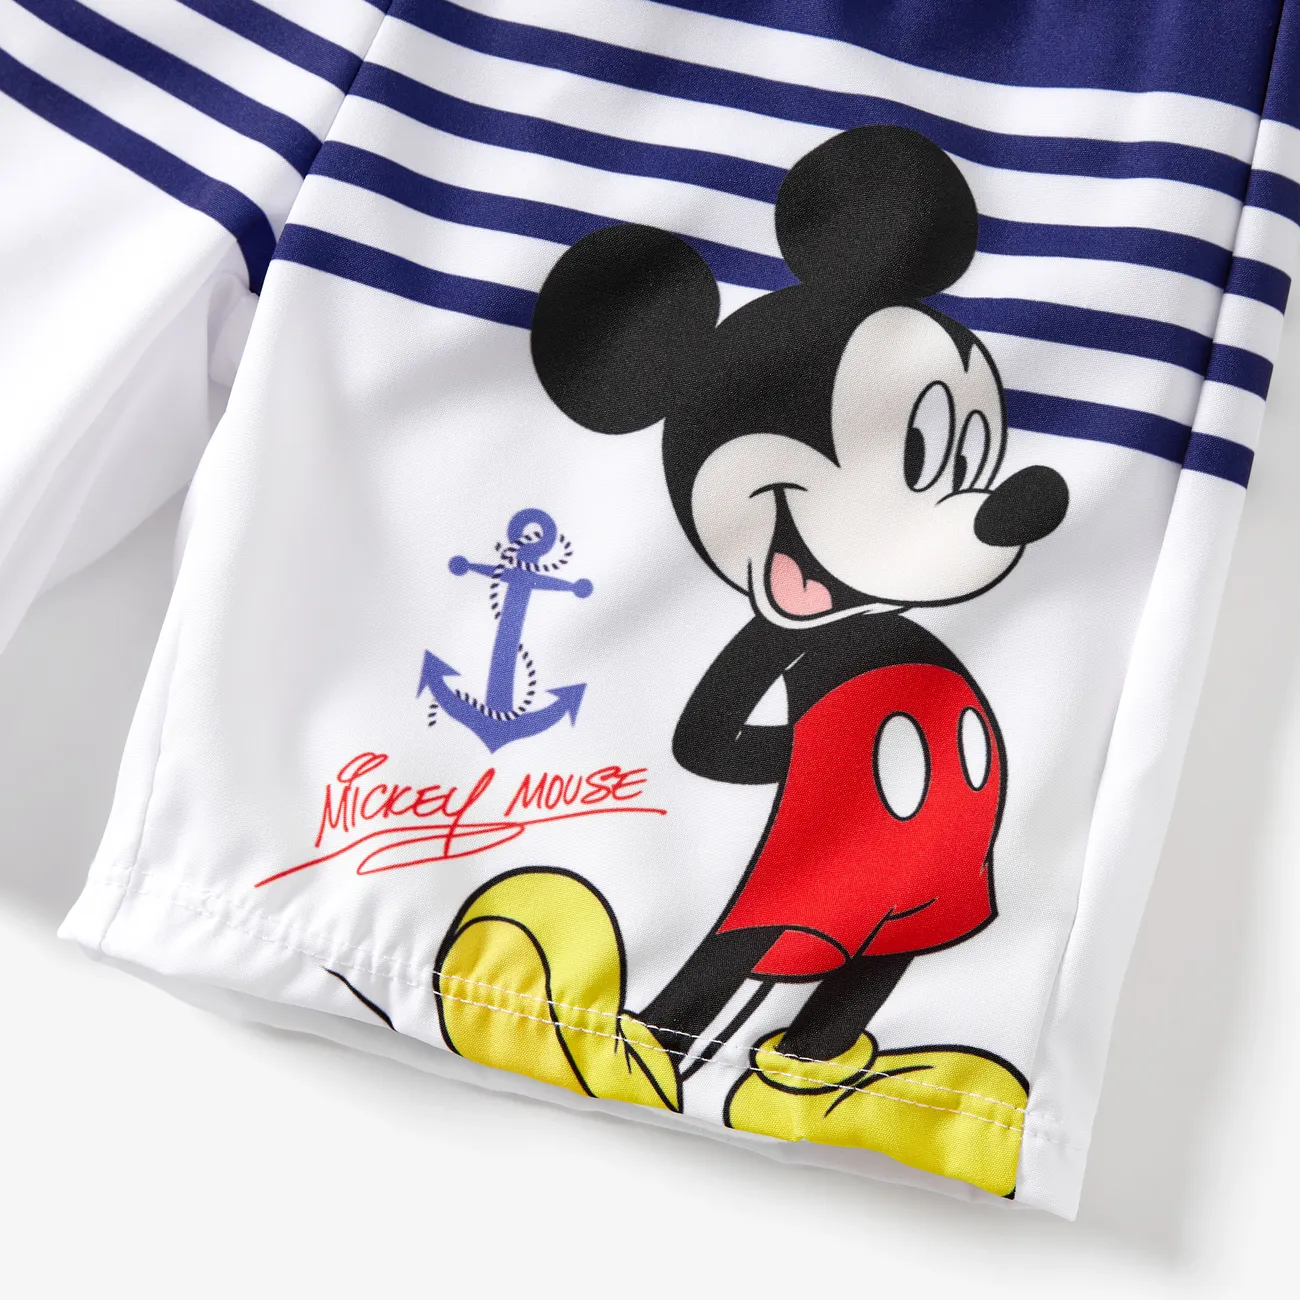 Disney Mickey and Friends للجنسين حافة كشكشة طفولي ملابس سباحة أزرق غامق big image 1